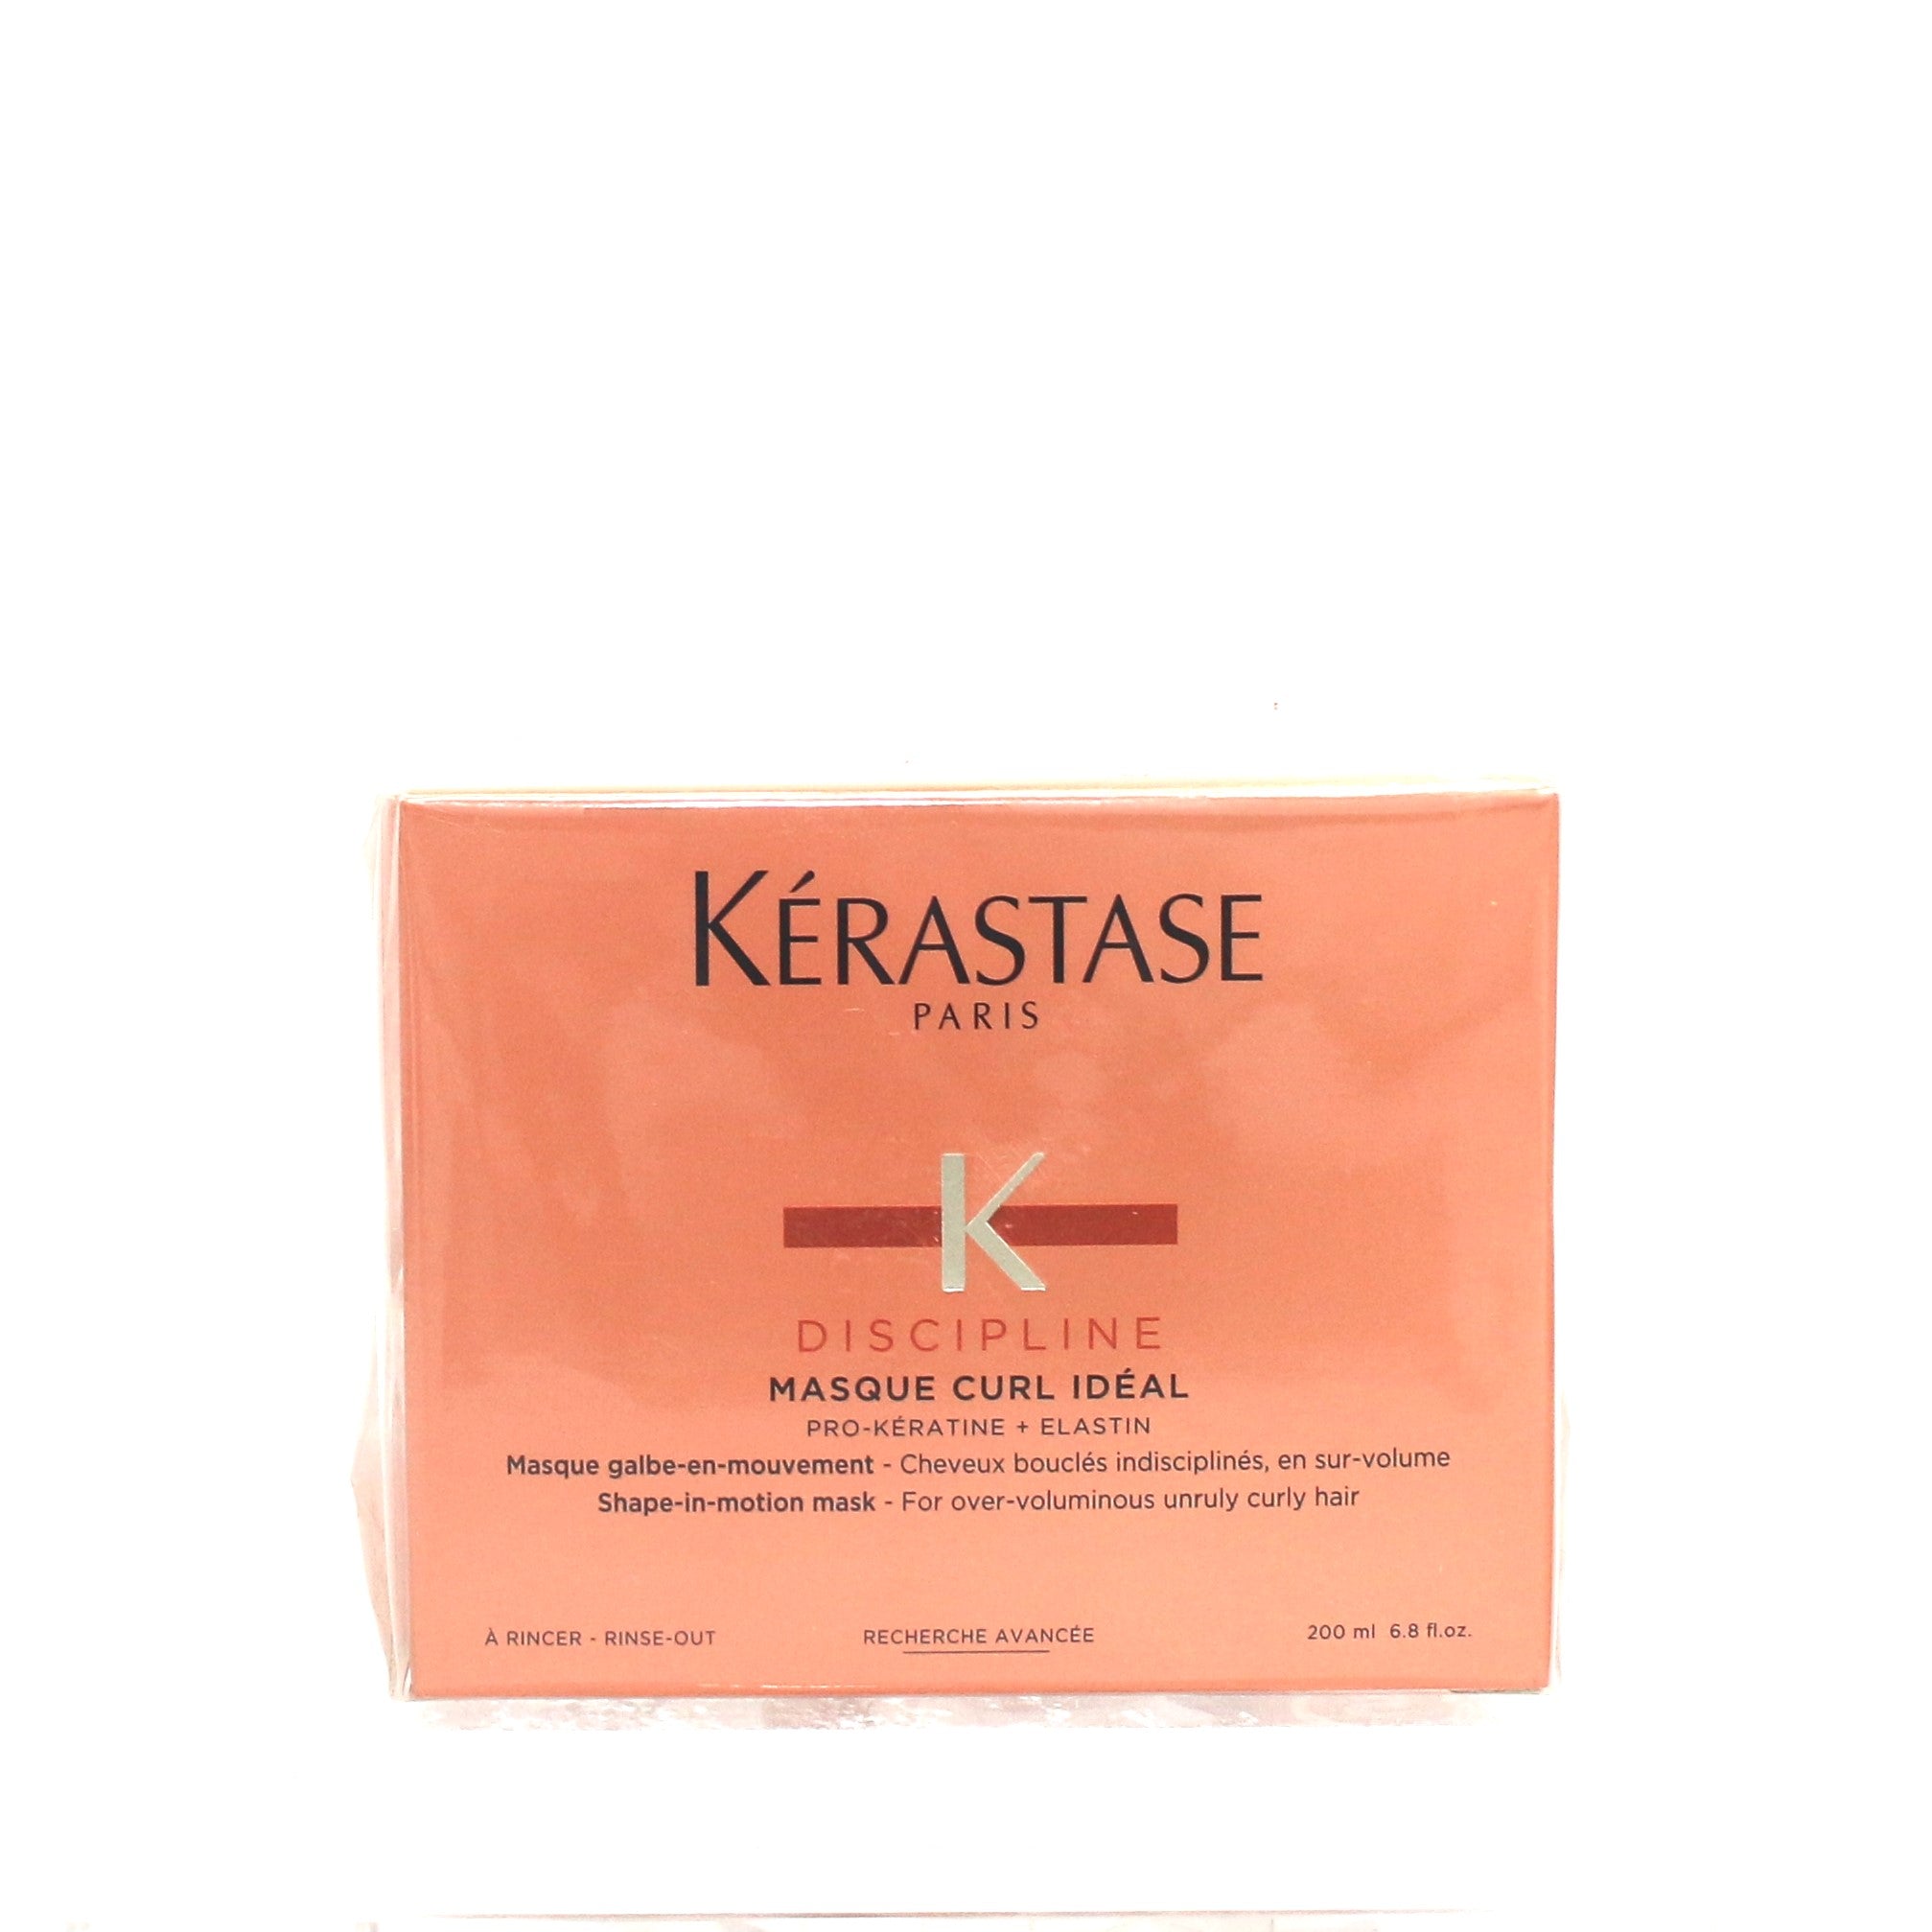 KERASTASE Discipline Masque Curl Ideal 6.8 oz